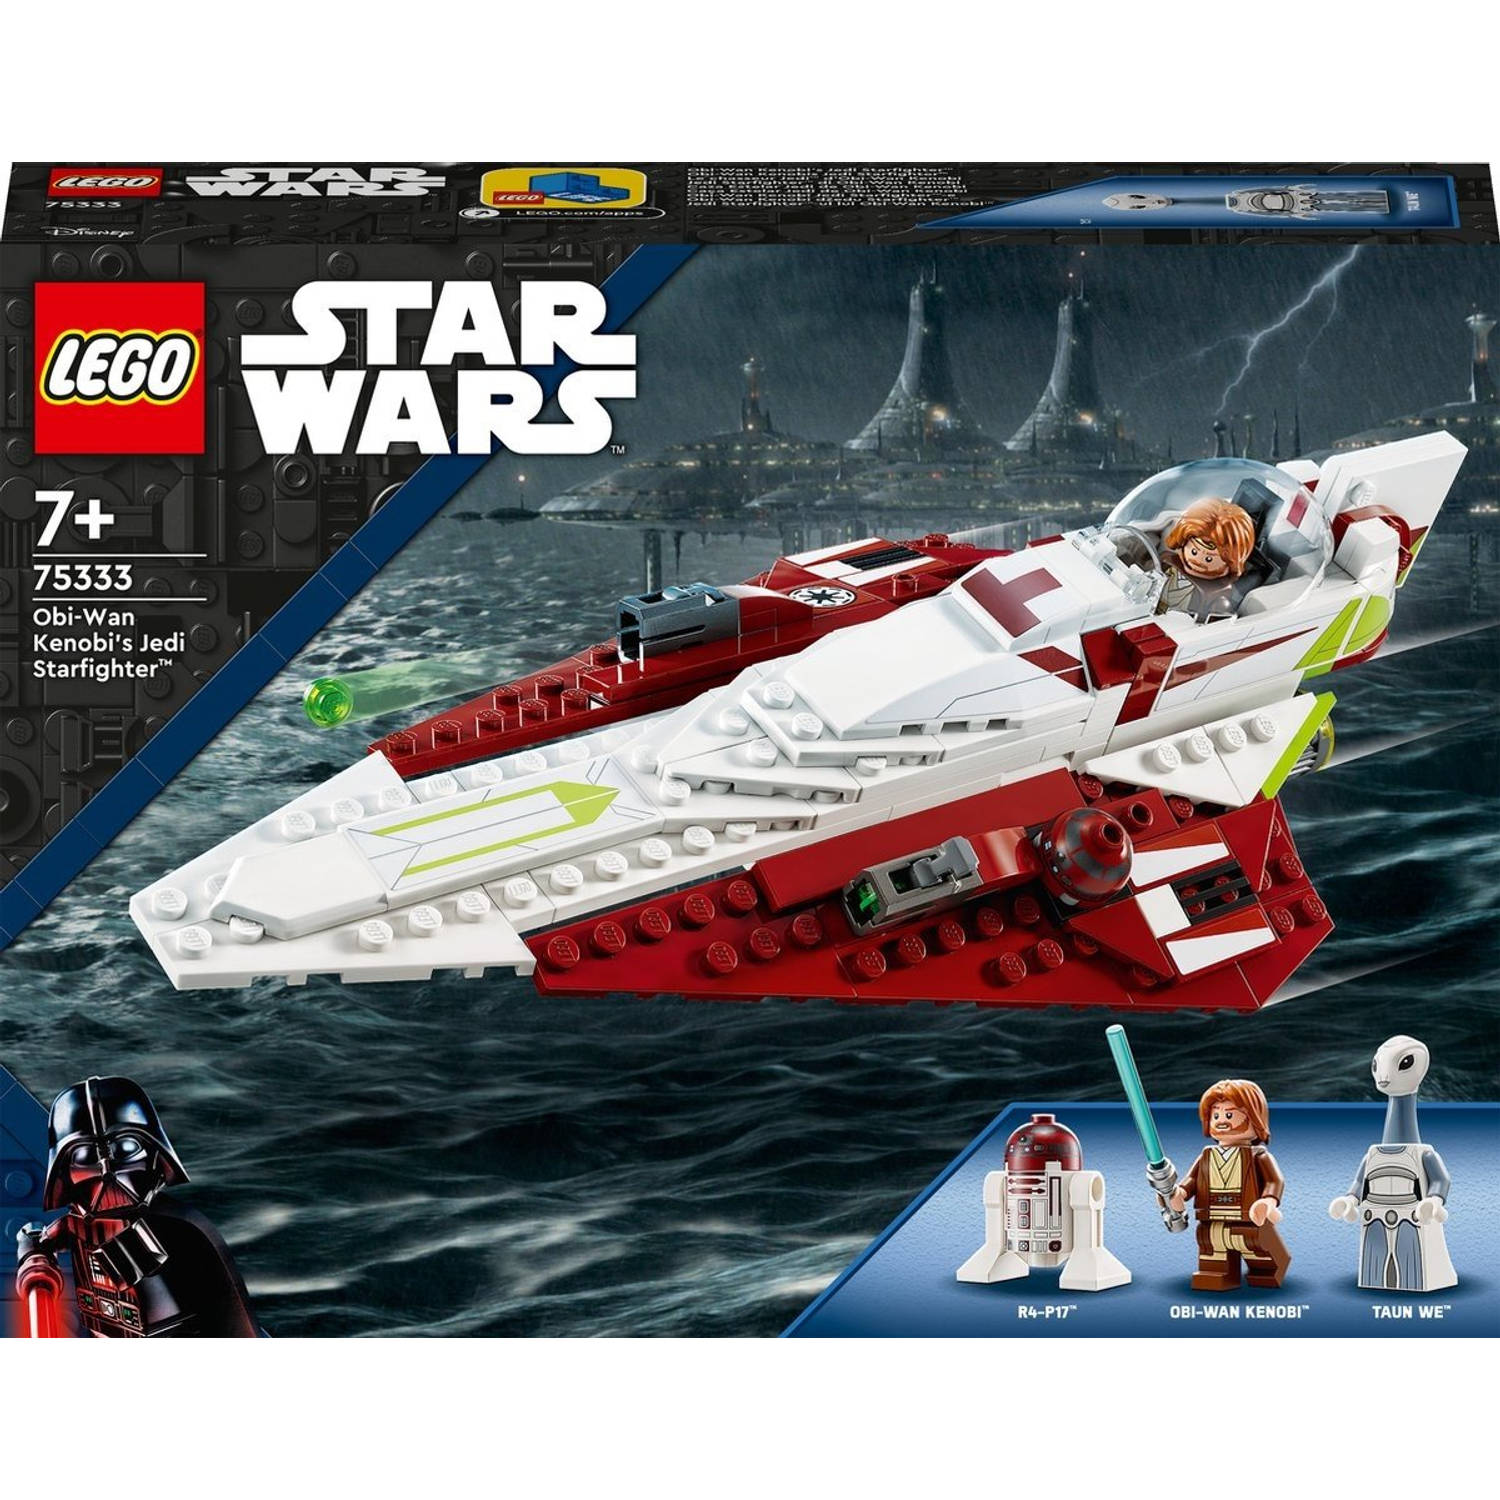 LEGO® STAR WARS™ 75333 Obi-Wan Kenobis Jedi Starfighter